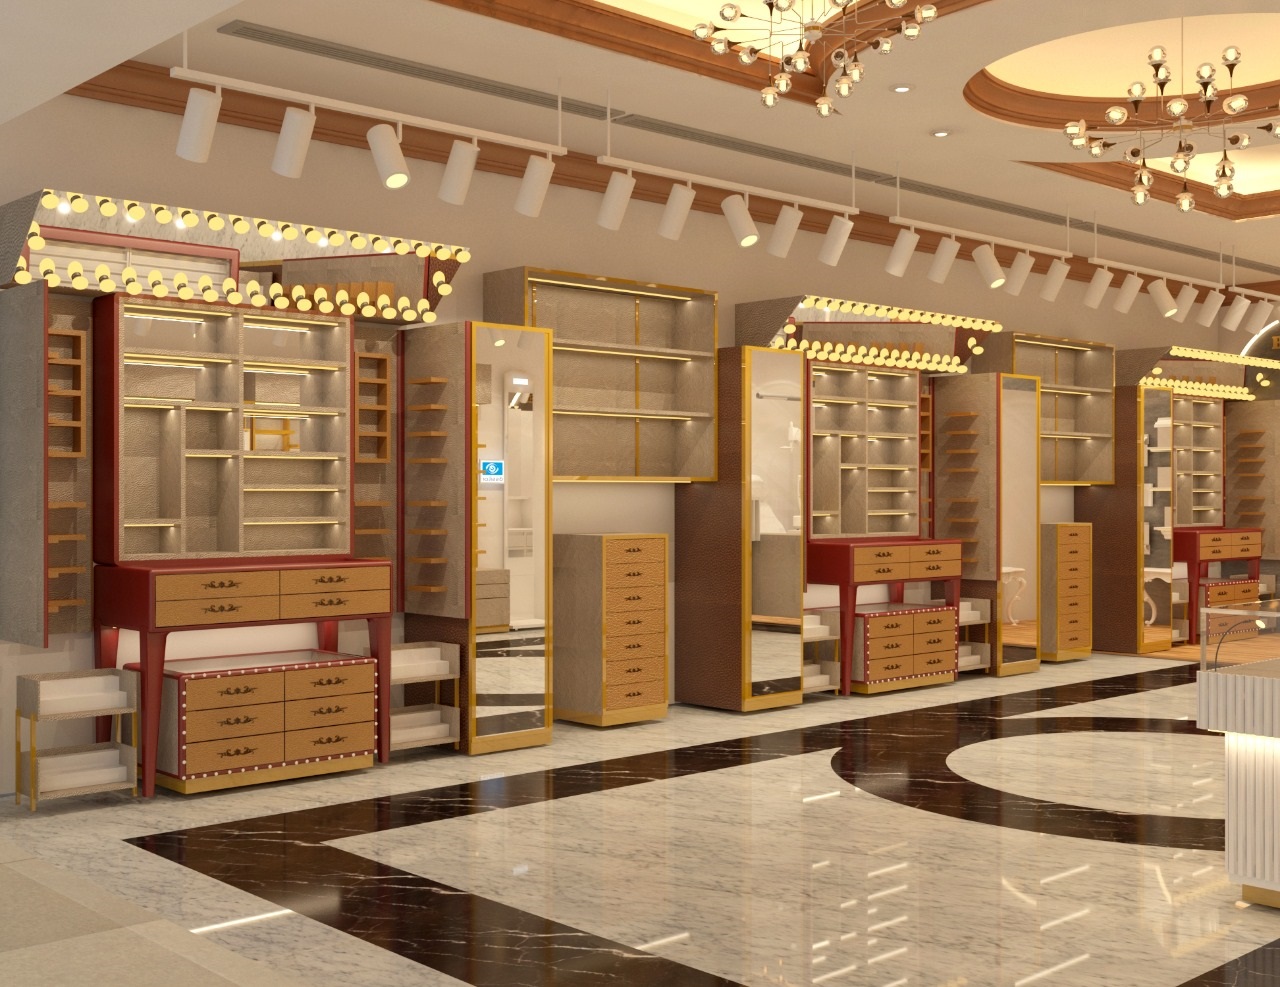 Optical Store Interior Design - The Monarch Enterprises